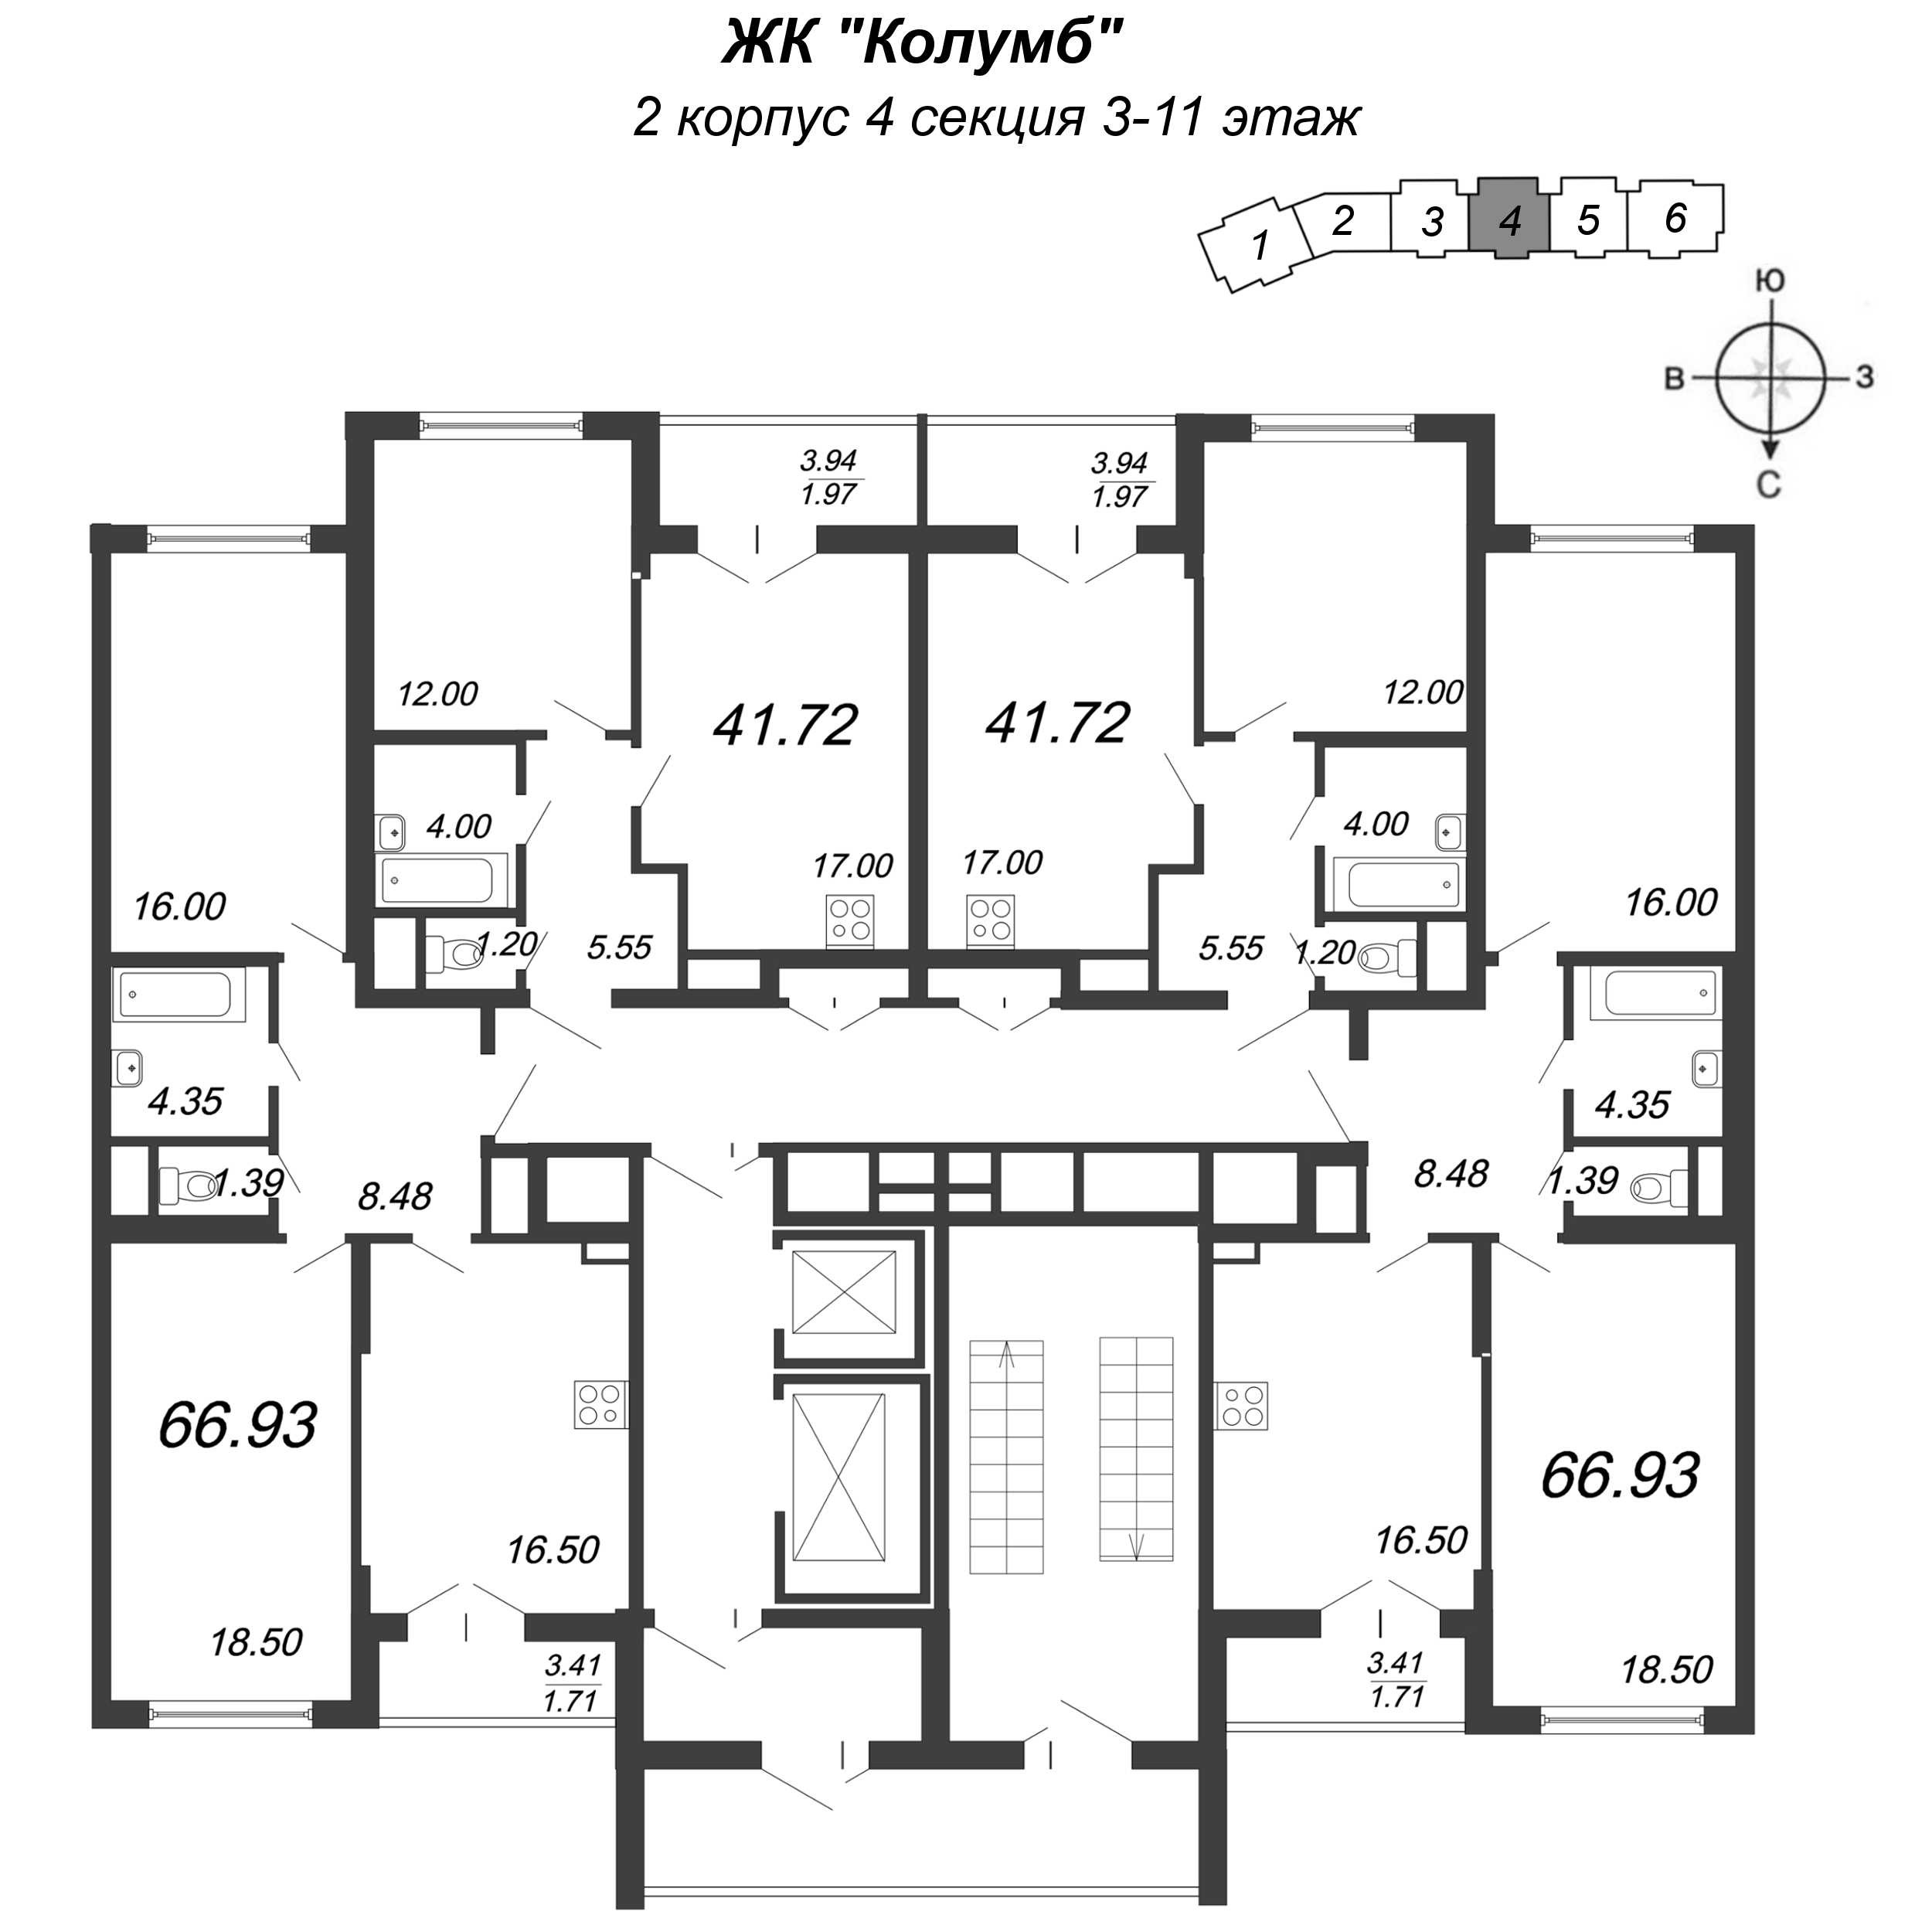 2-комнатная (Евро) квартира, 42.3 м² в ЖК "Колумб" - планировка этажа